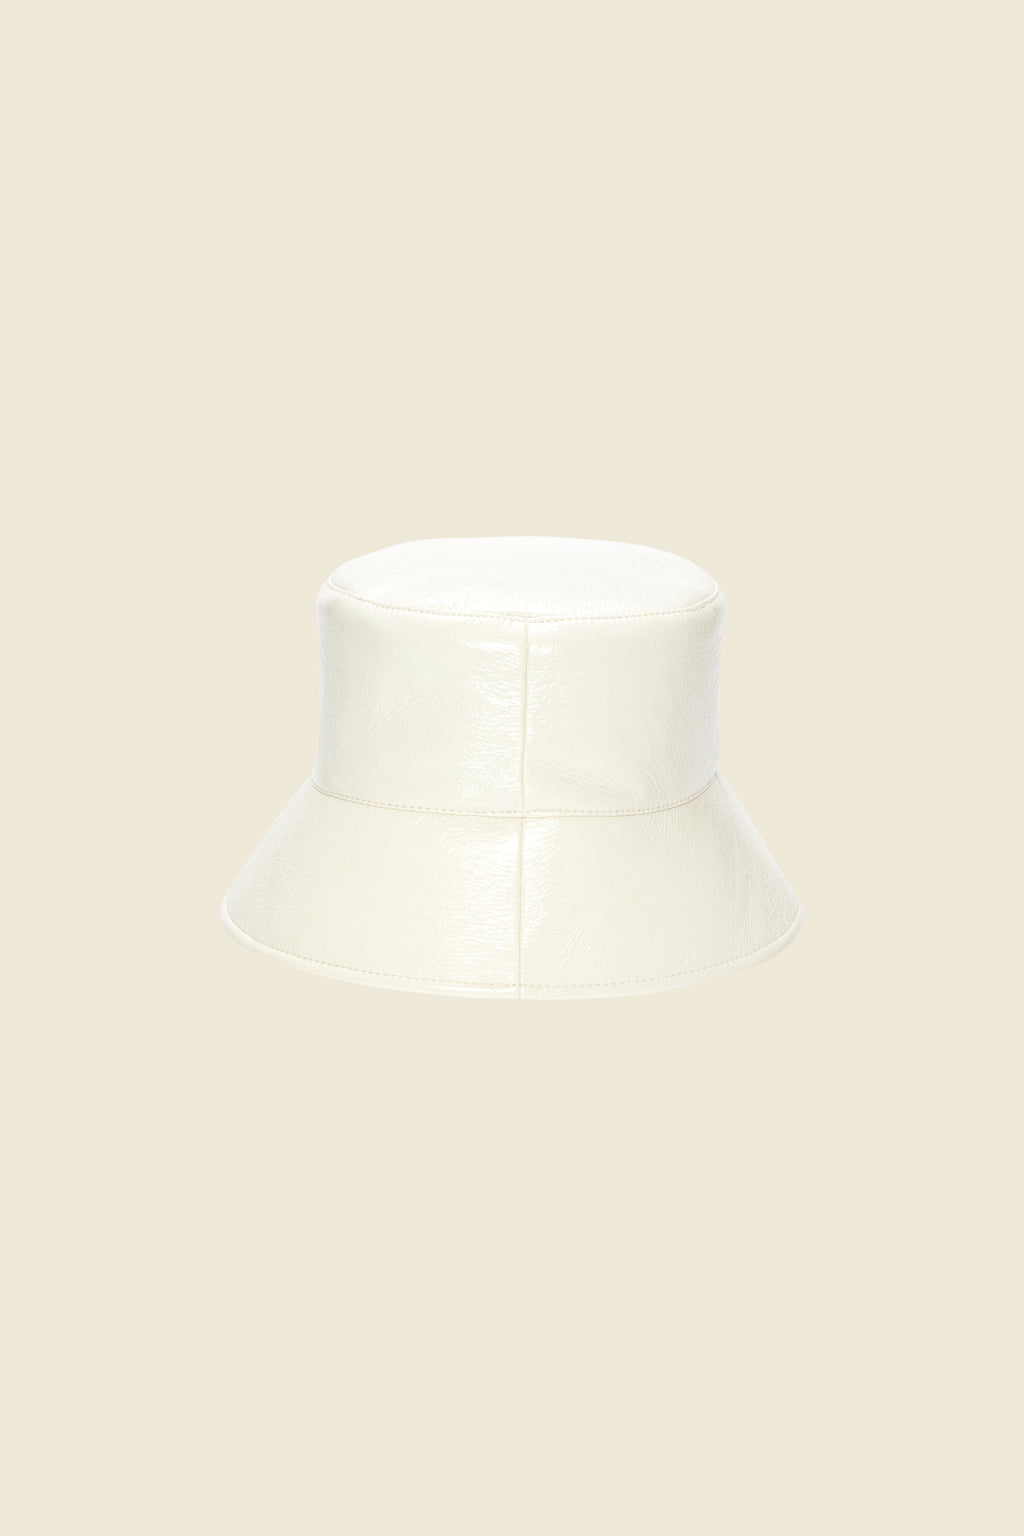 Dorothee Schumacher-OUTLET-SALE-SHINY MOMENT bucket hat-OS-eggshell-ARCHIVIST